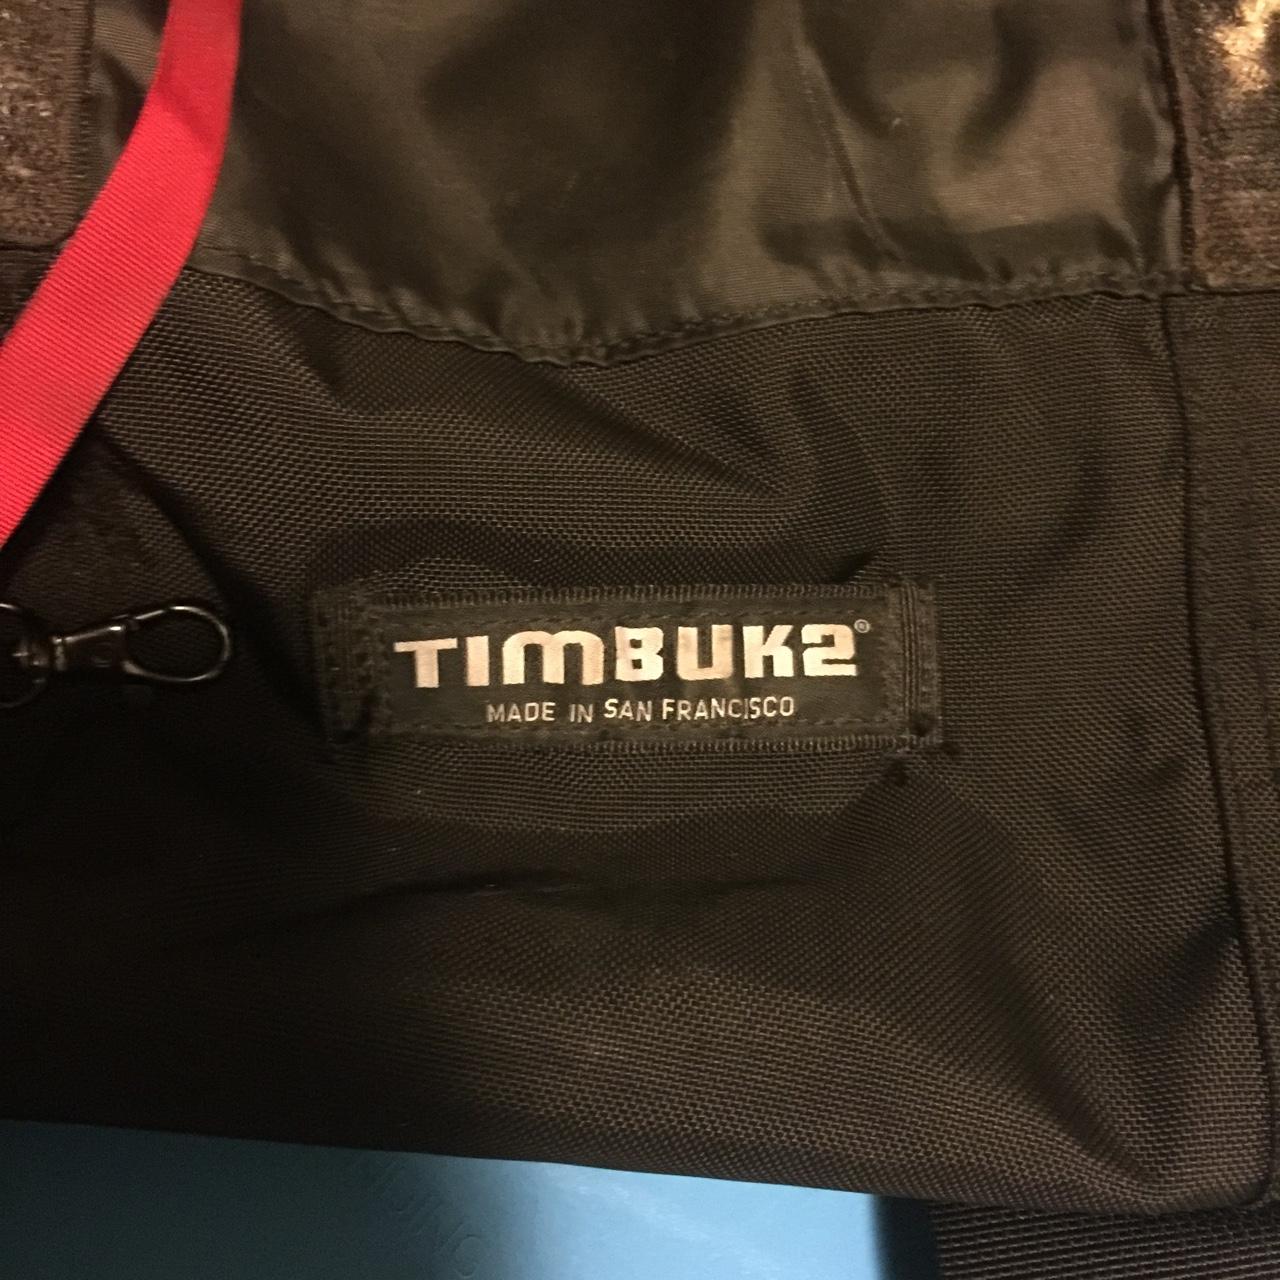 Timbuk2 Timbuktu sf San Francisco messenger bag side - Depop